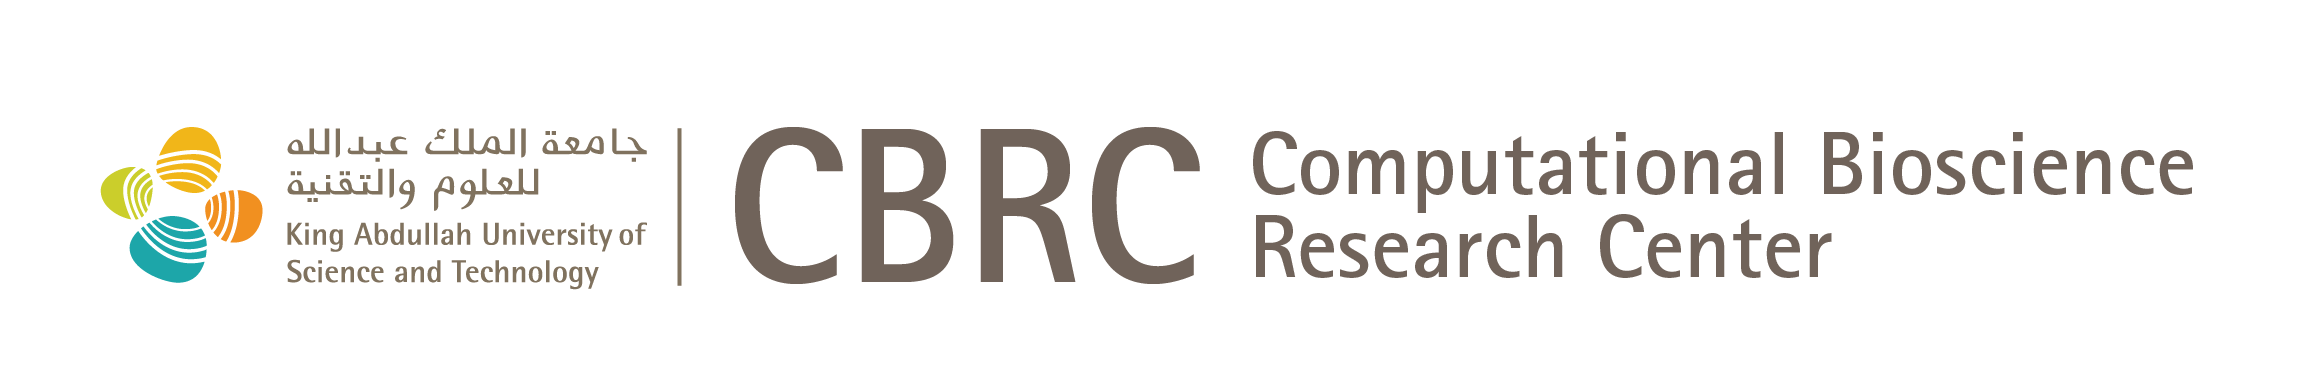 RE_CBRC_171002_ Computational Bioscience Research Center Logo Lockup_Colored